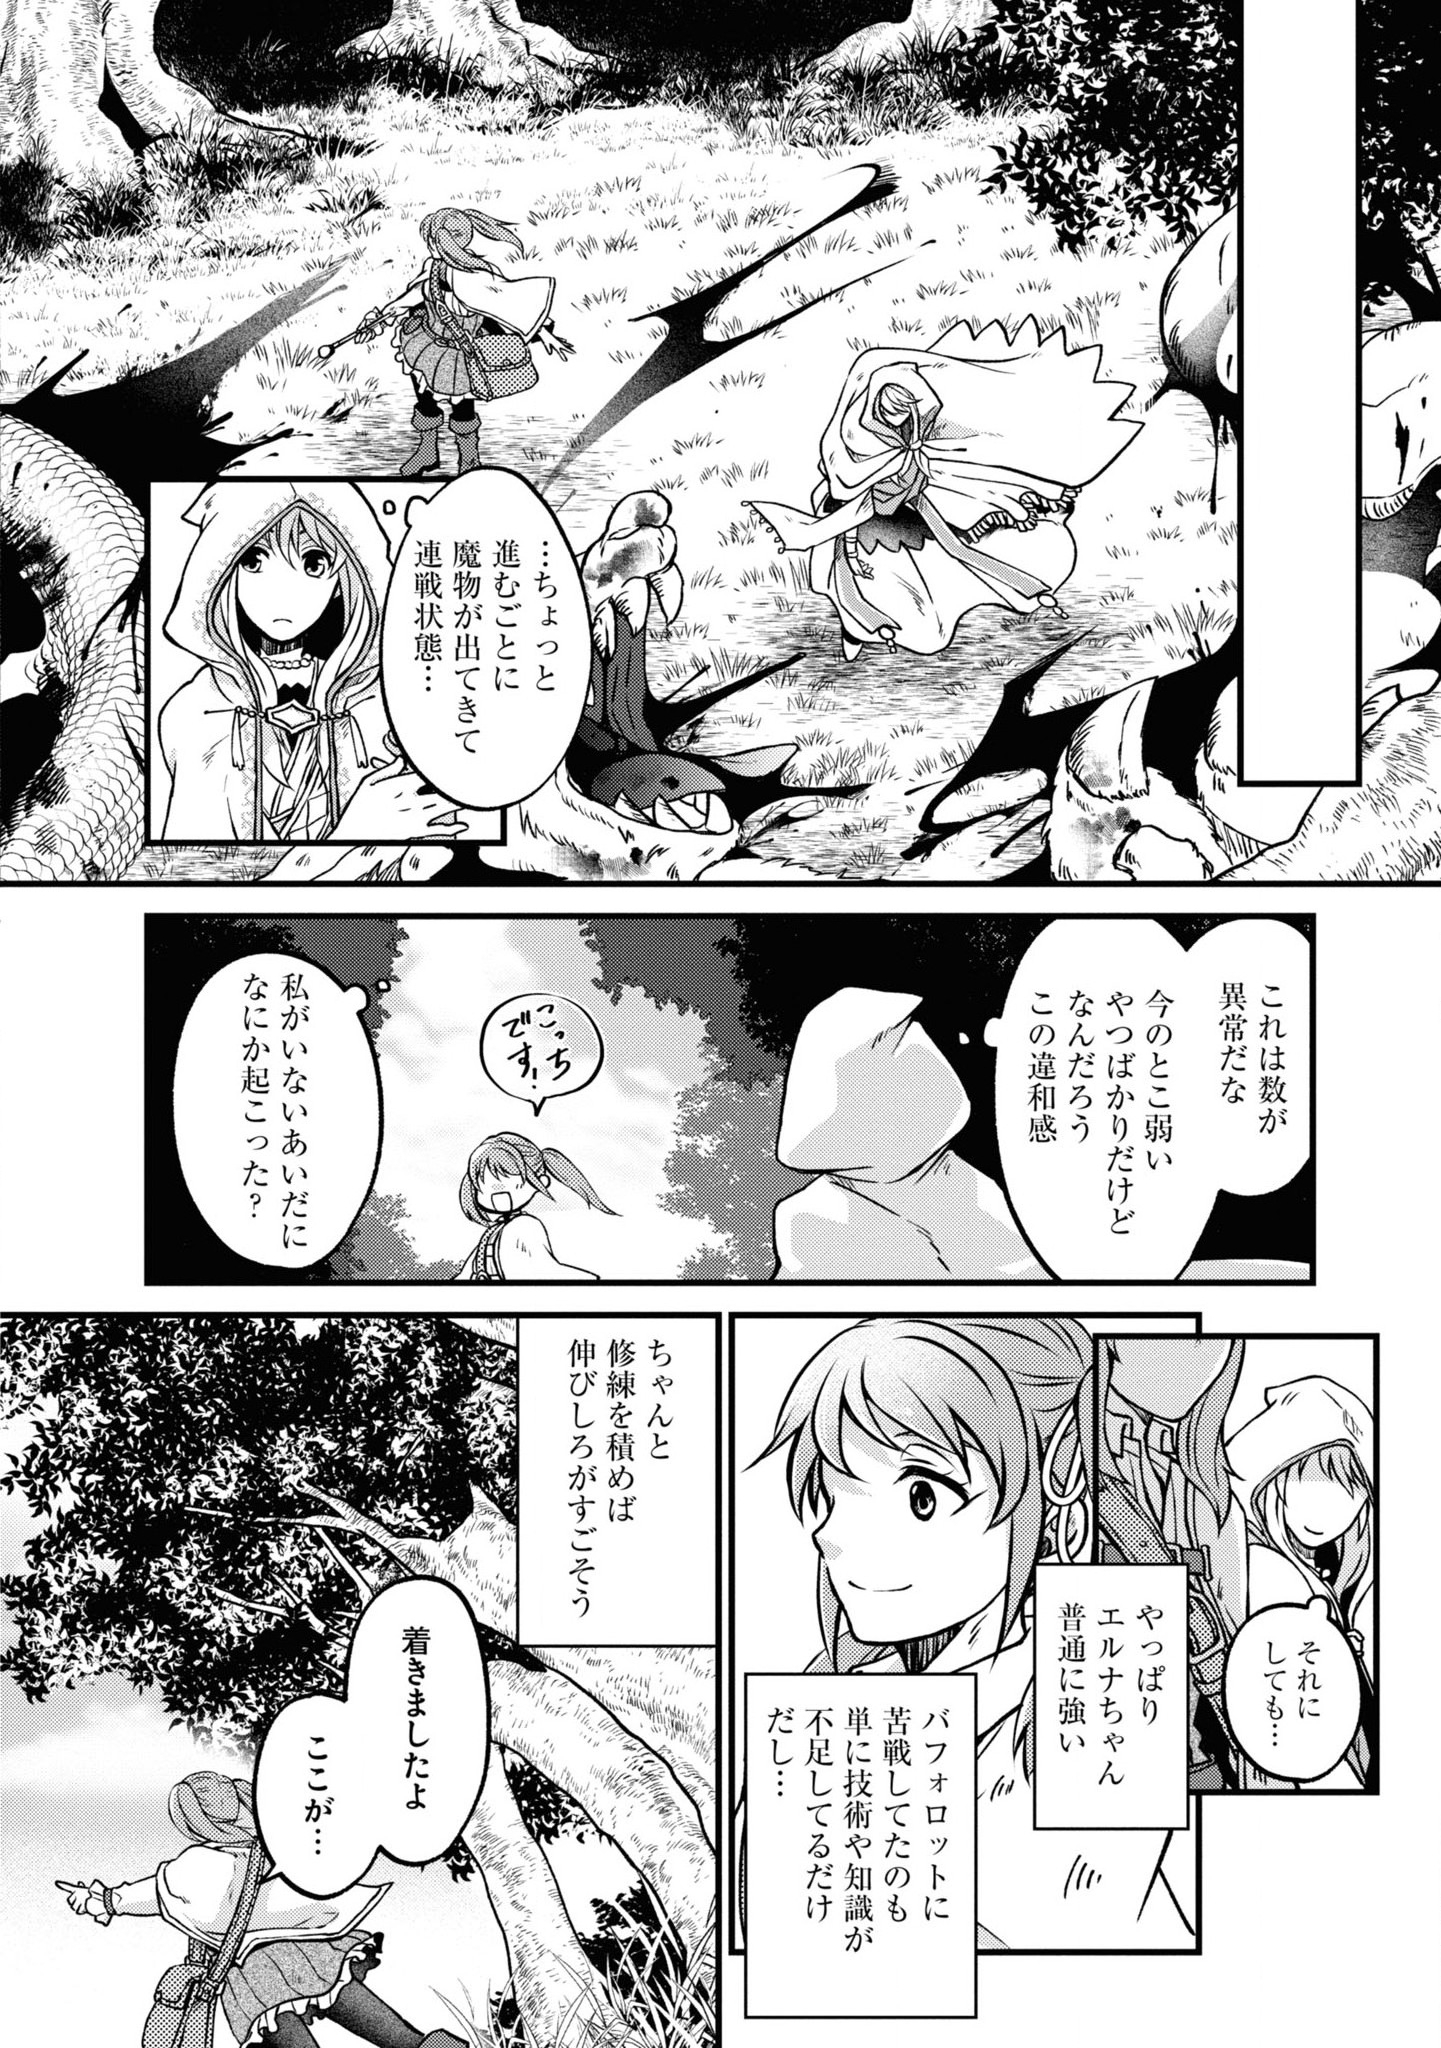 Akuu no Seijo - Chapter 1 - Page 30